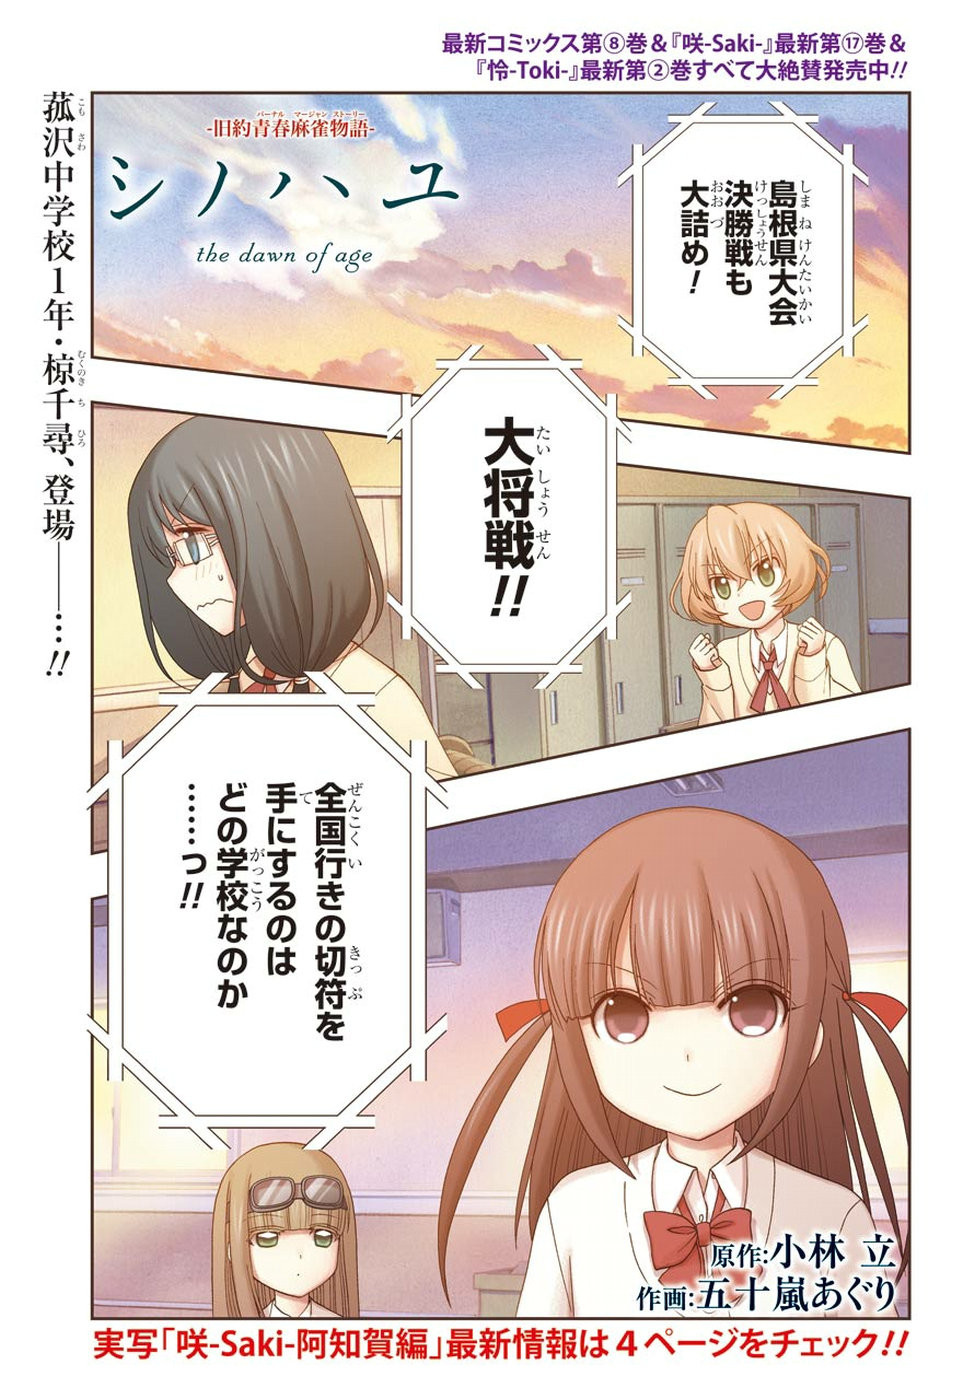 Shinohayu - The Dawn of Age Manga - Chapter 051 - Page 1